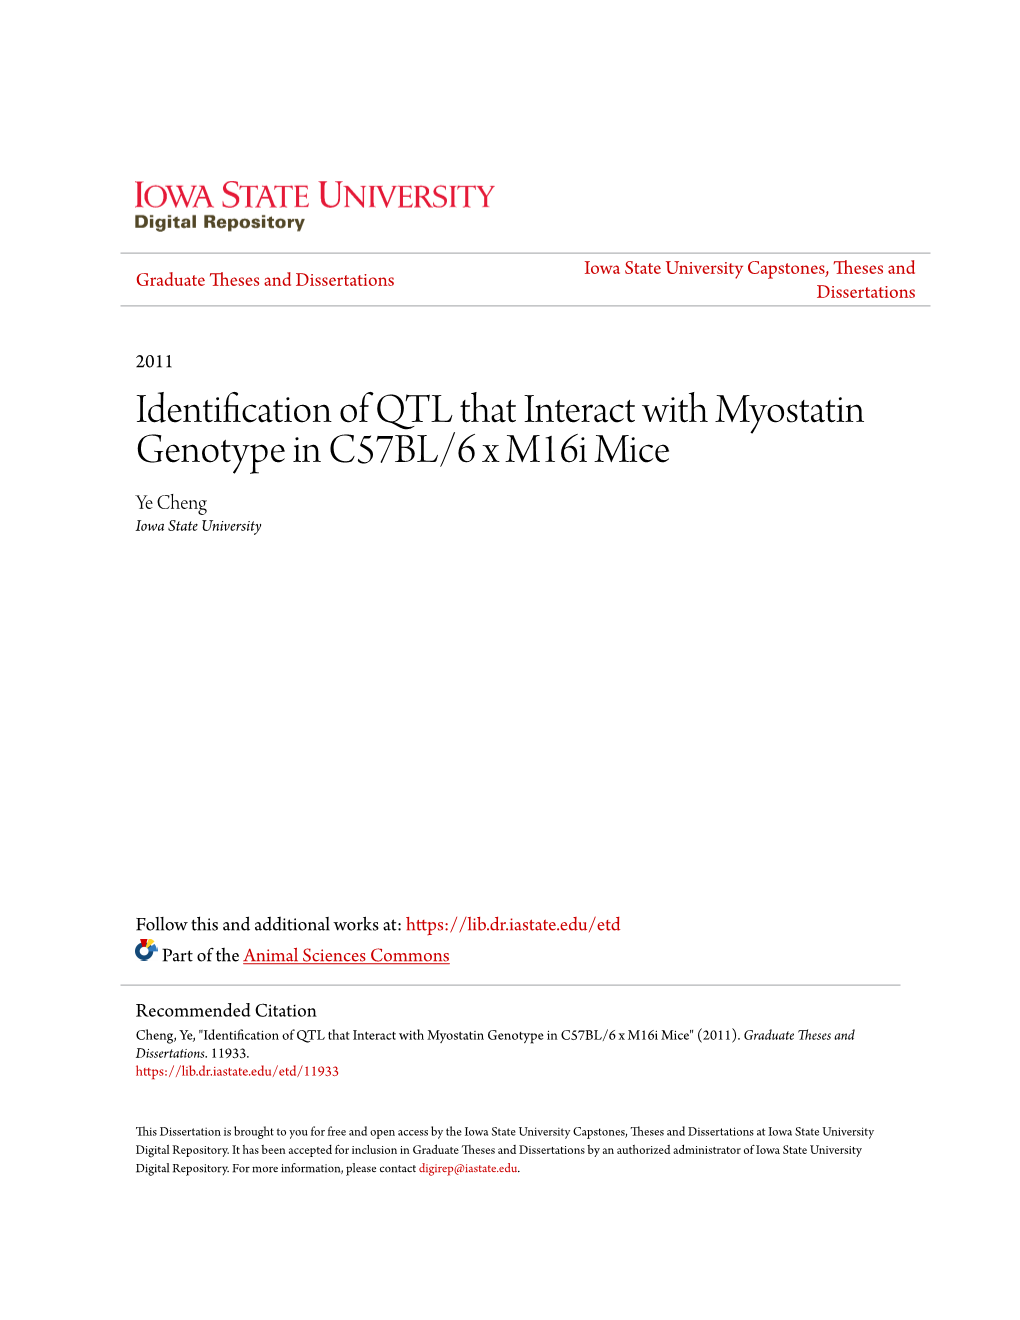 Identification of QTL That Interact with Myostatin Genotype in C57BL/6 X M16i Mice Ye Cheng Iowa State University